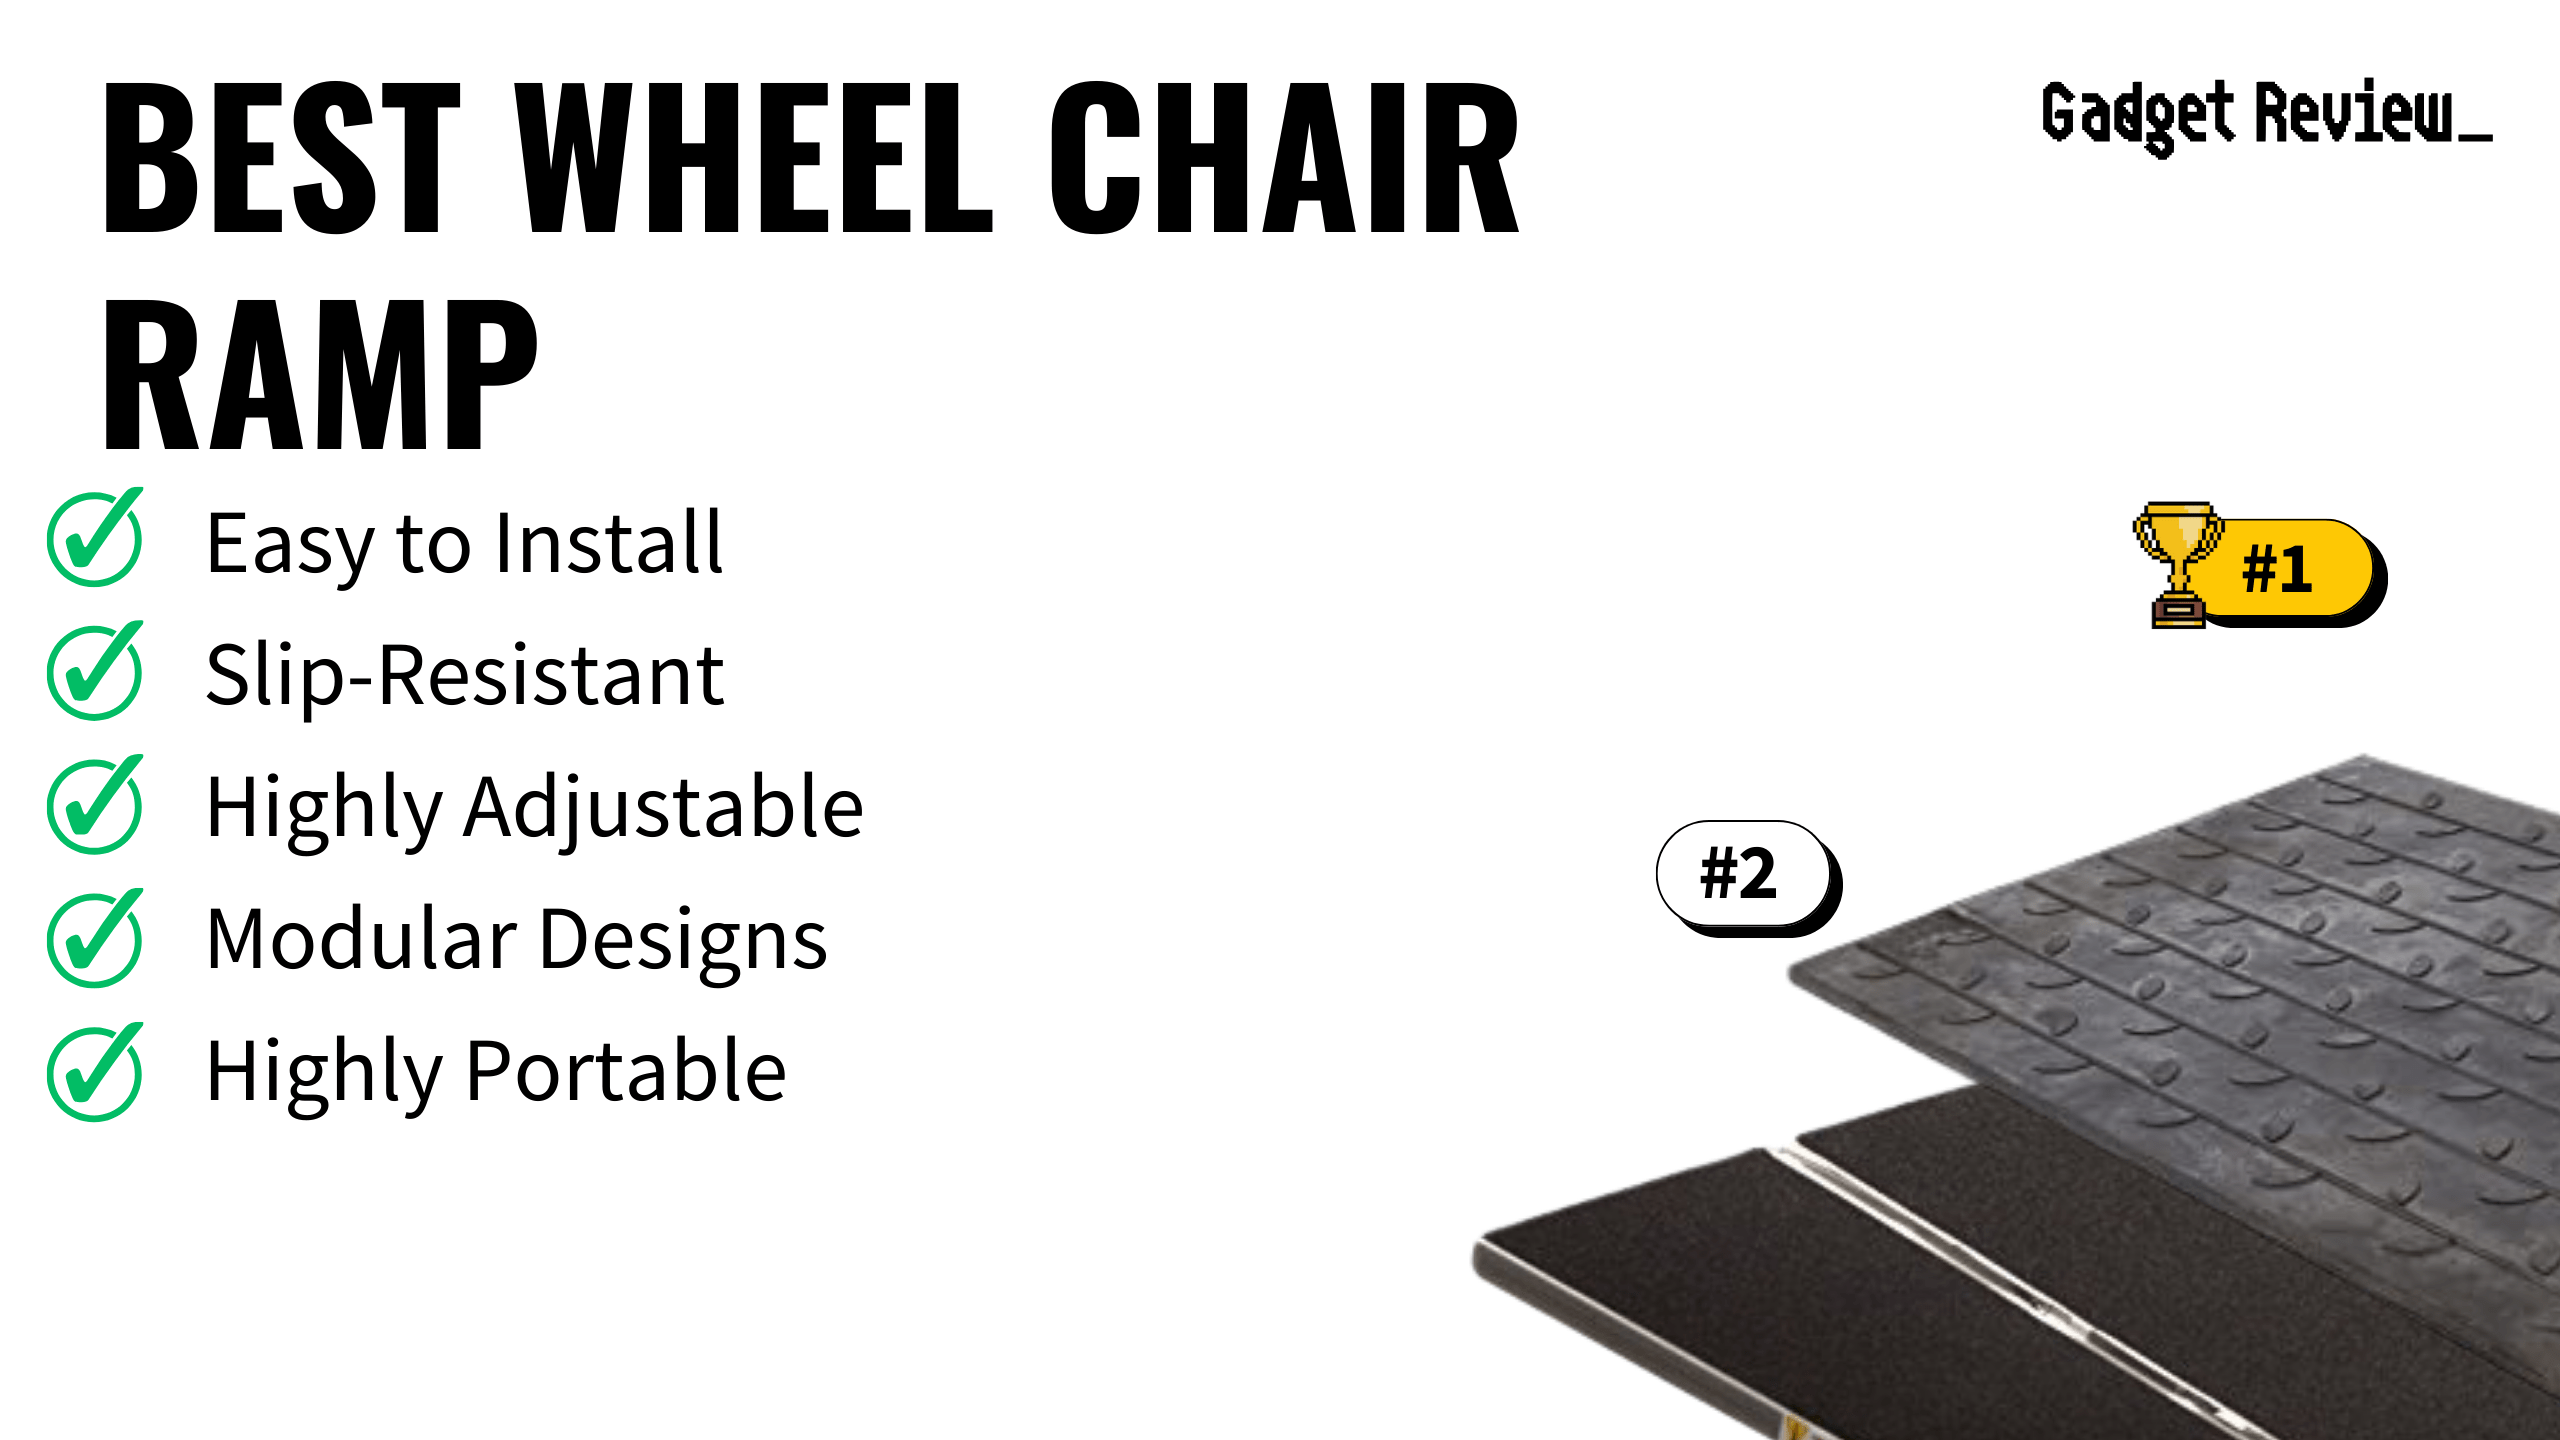 Best Wheel Chair Ramp